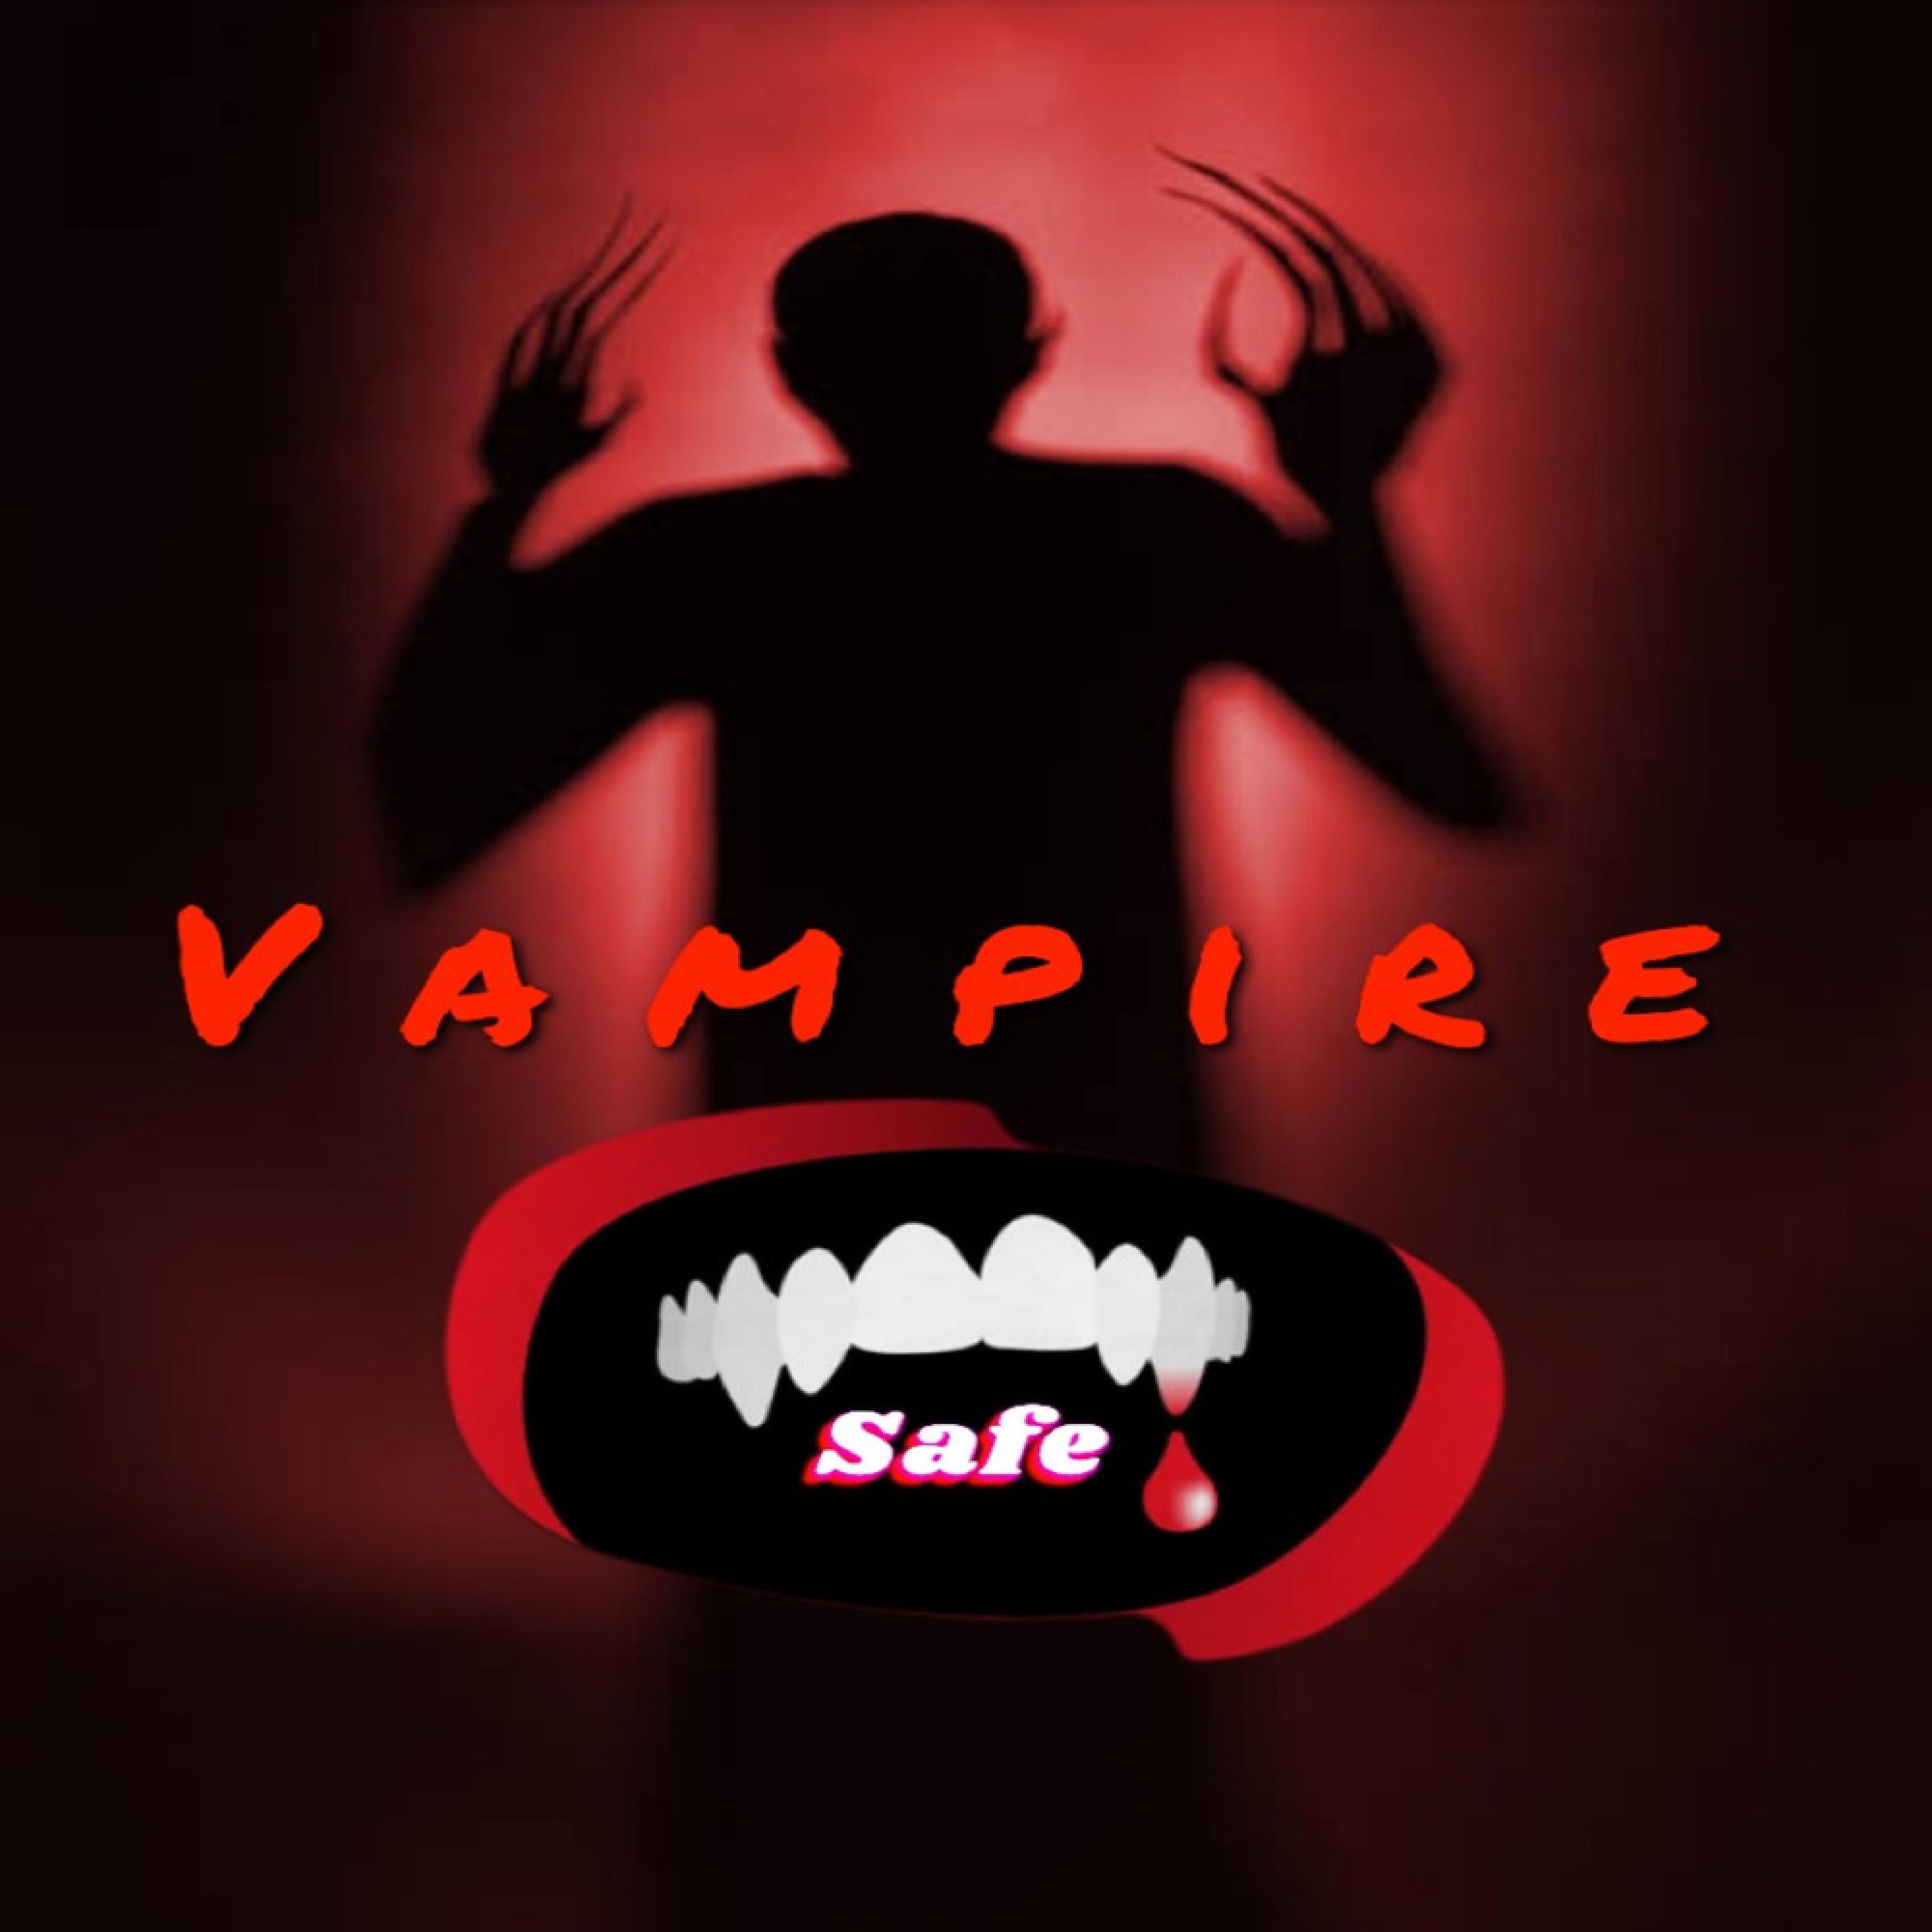 SAFE - Vampire